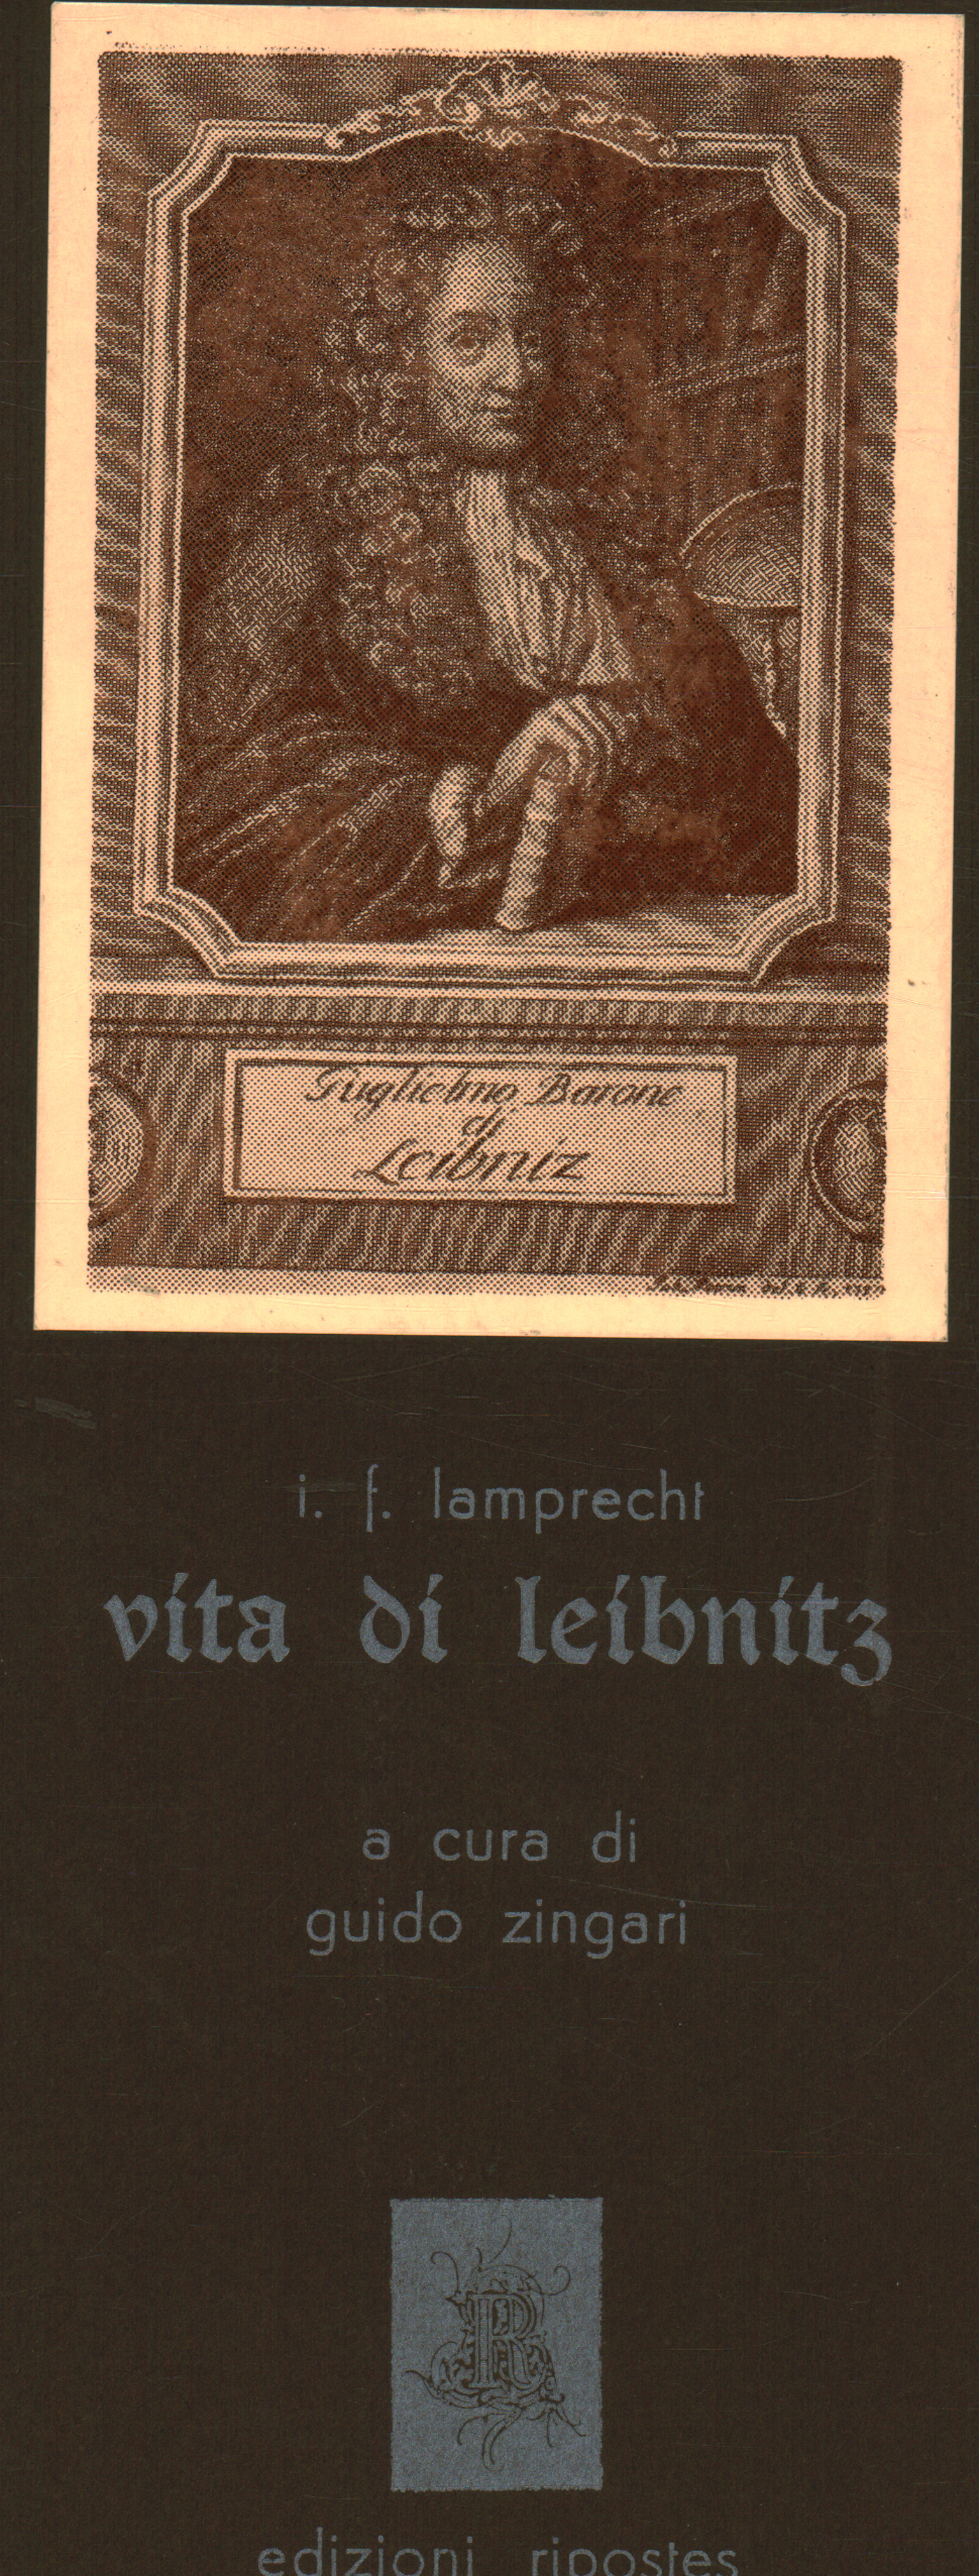 Vie de Leibnitz, I. F. Lamprecht